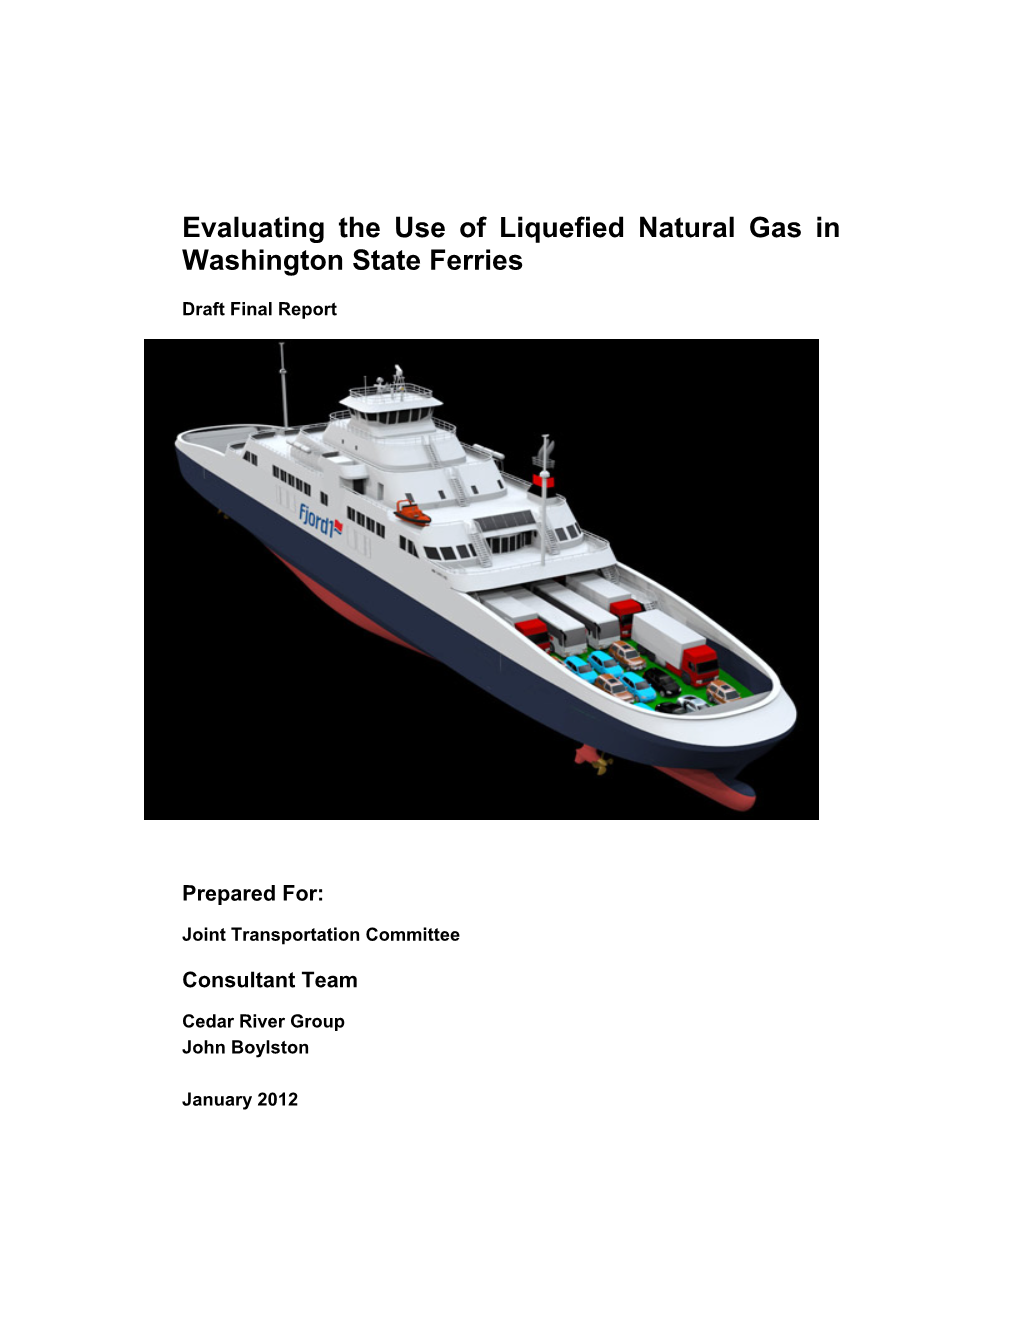 Ferry LNG Study Draft Final Report